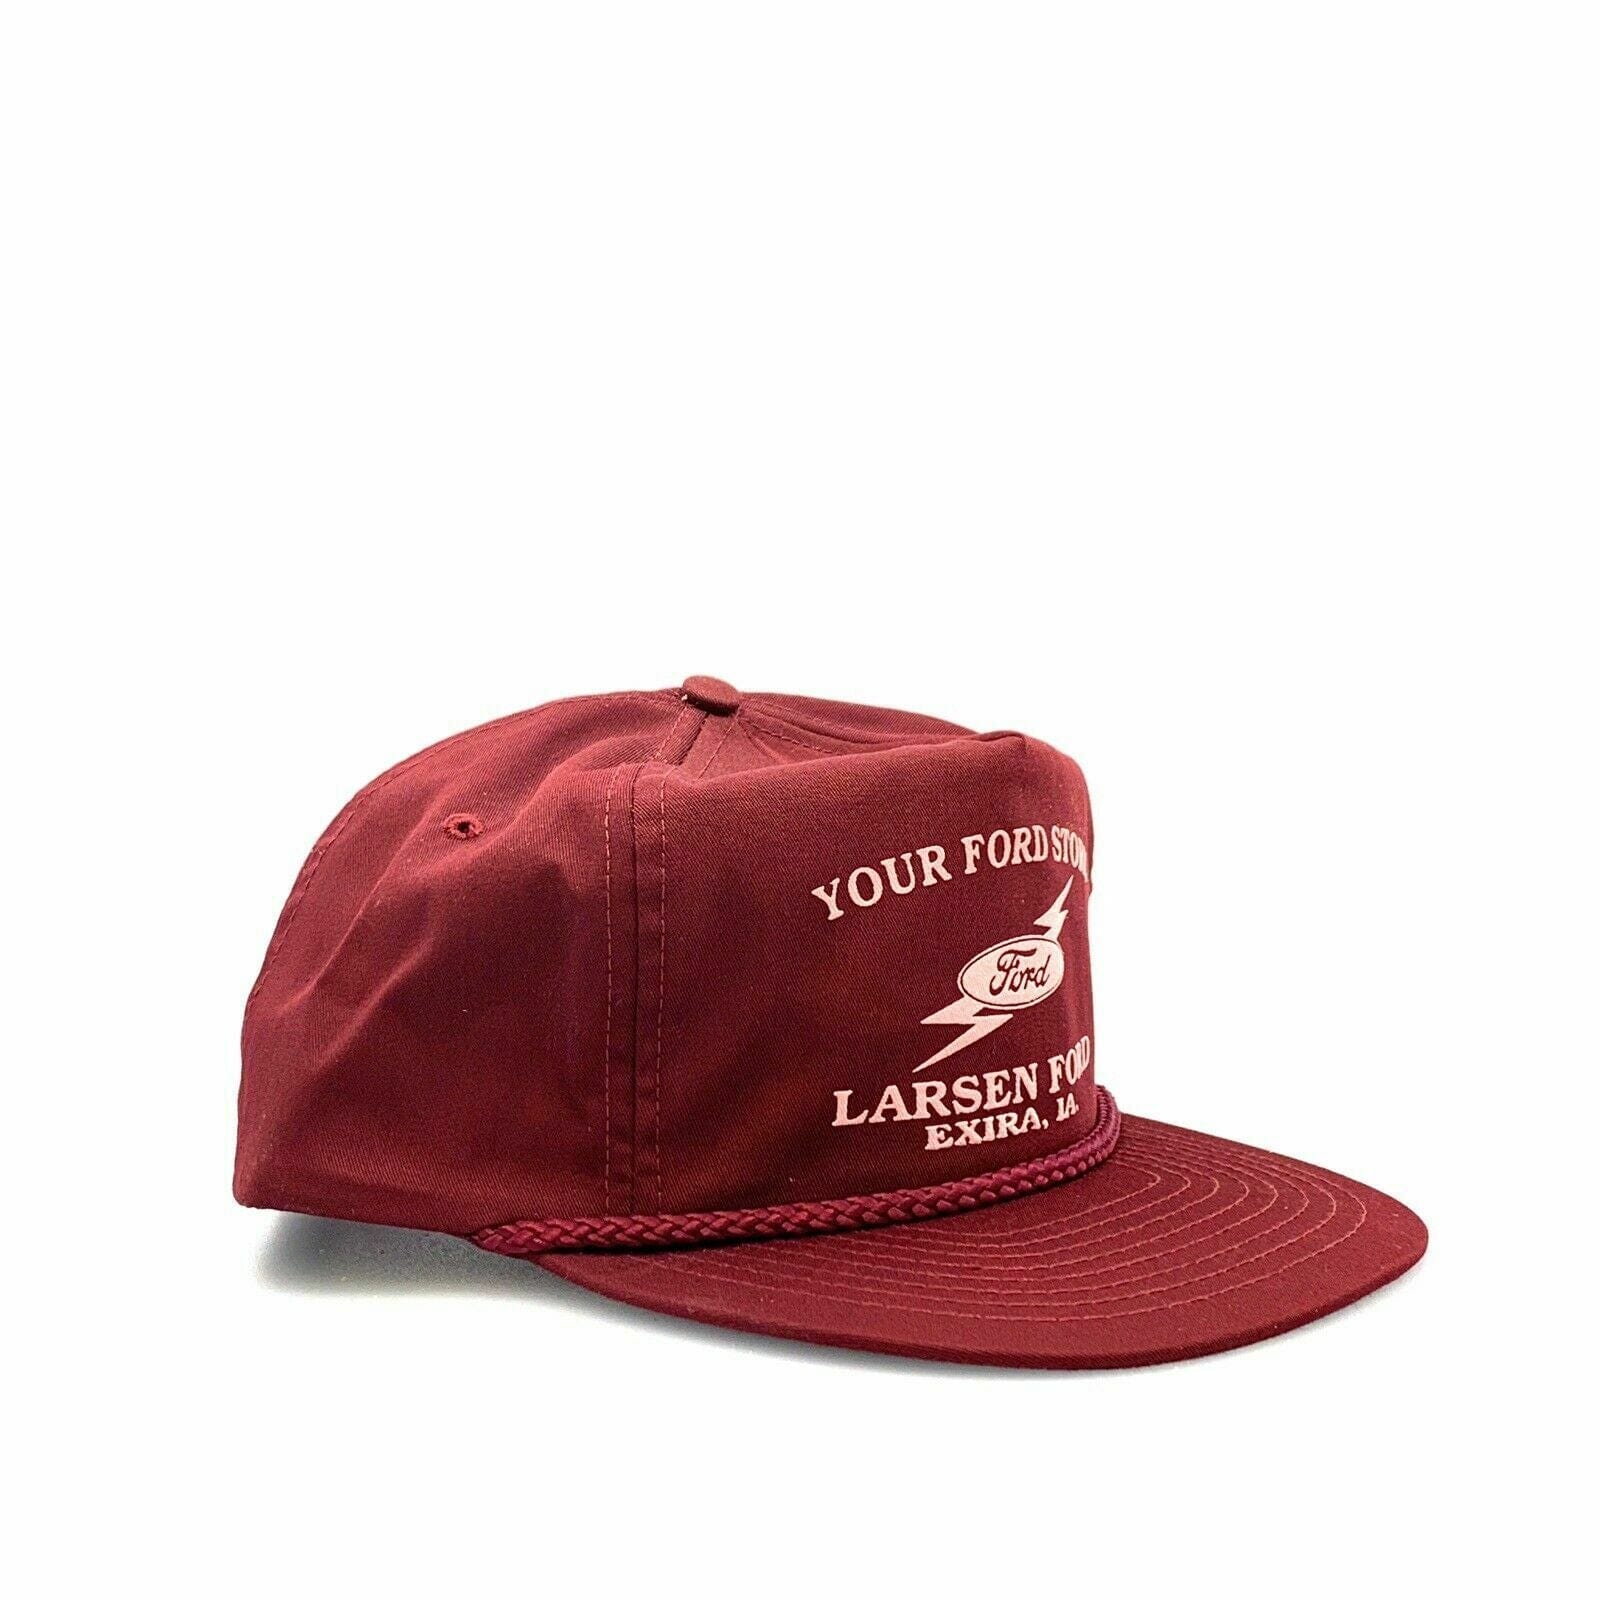 VTG Nissan Cap LARSEN FORD EXIRA IA SnapBack 5 Panel Rope Hat, Red - Adjustable - parsimonyshoppes